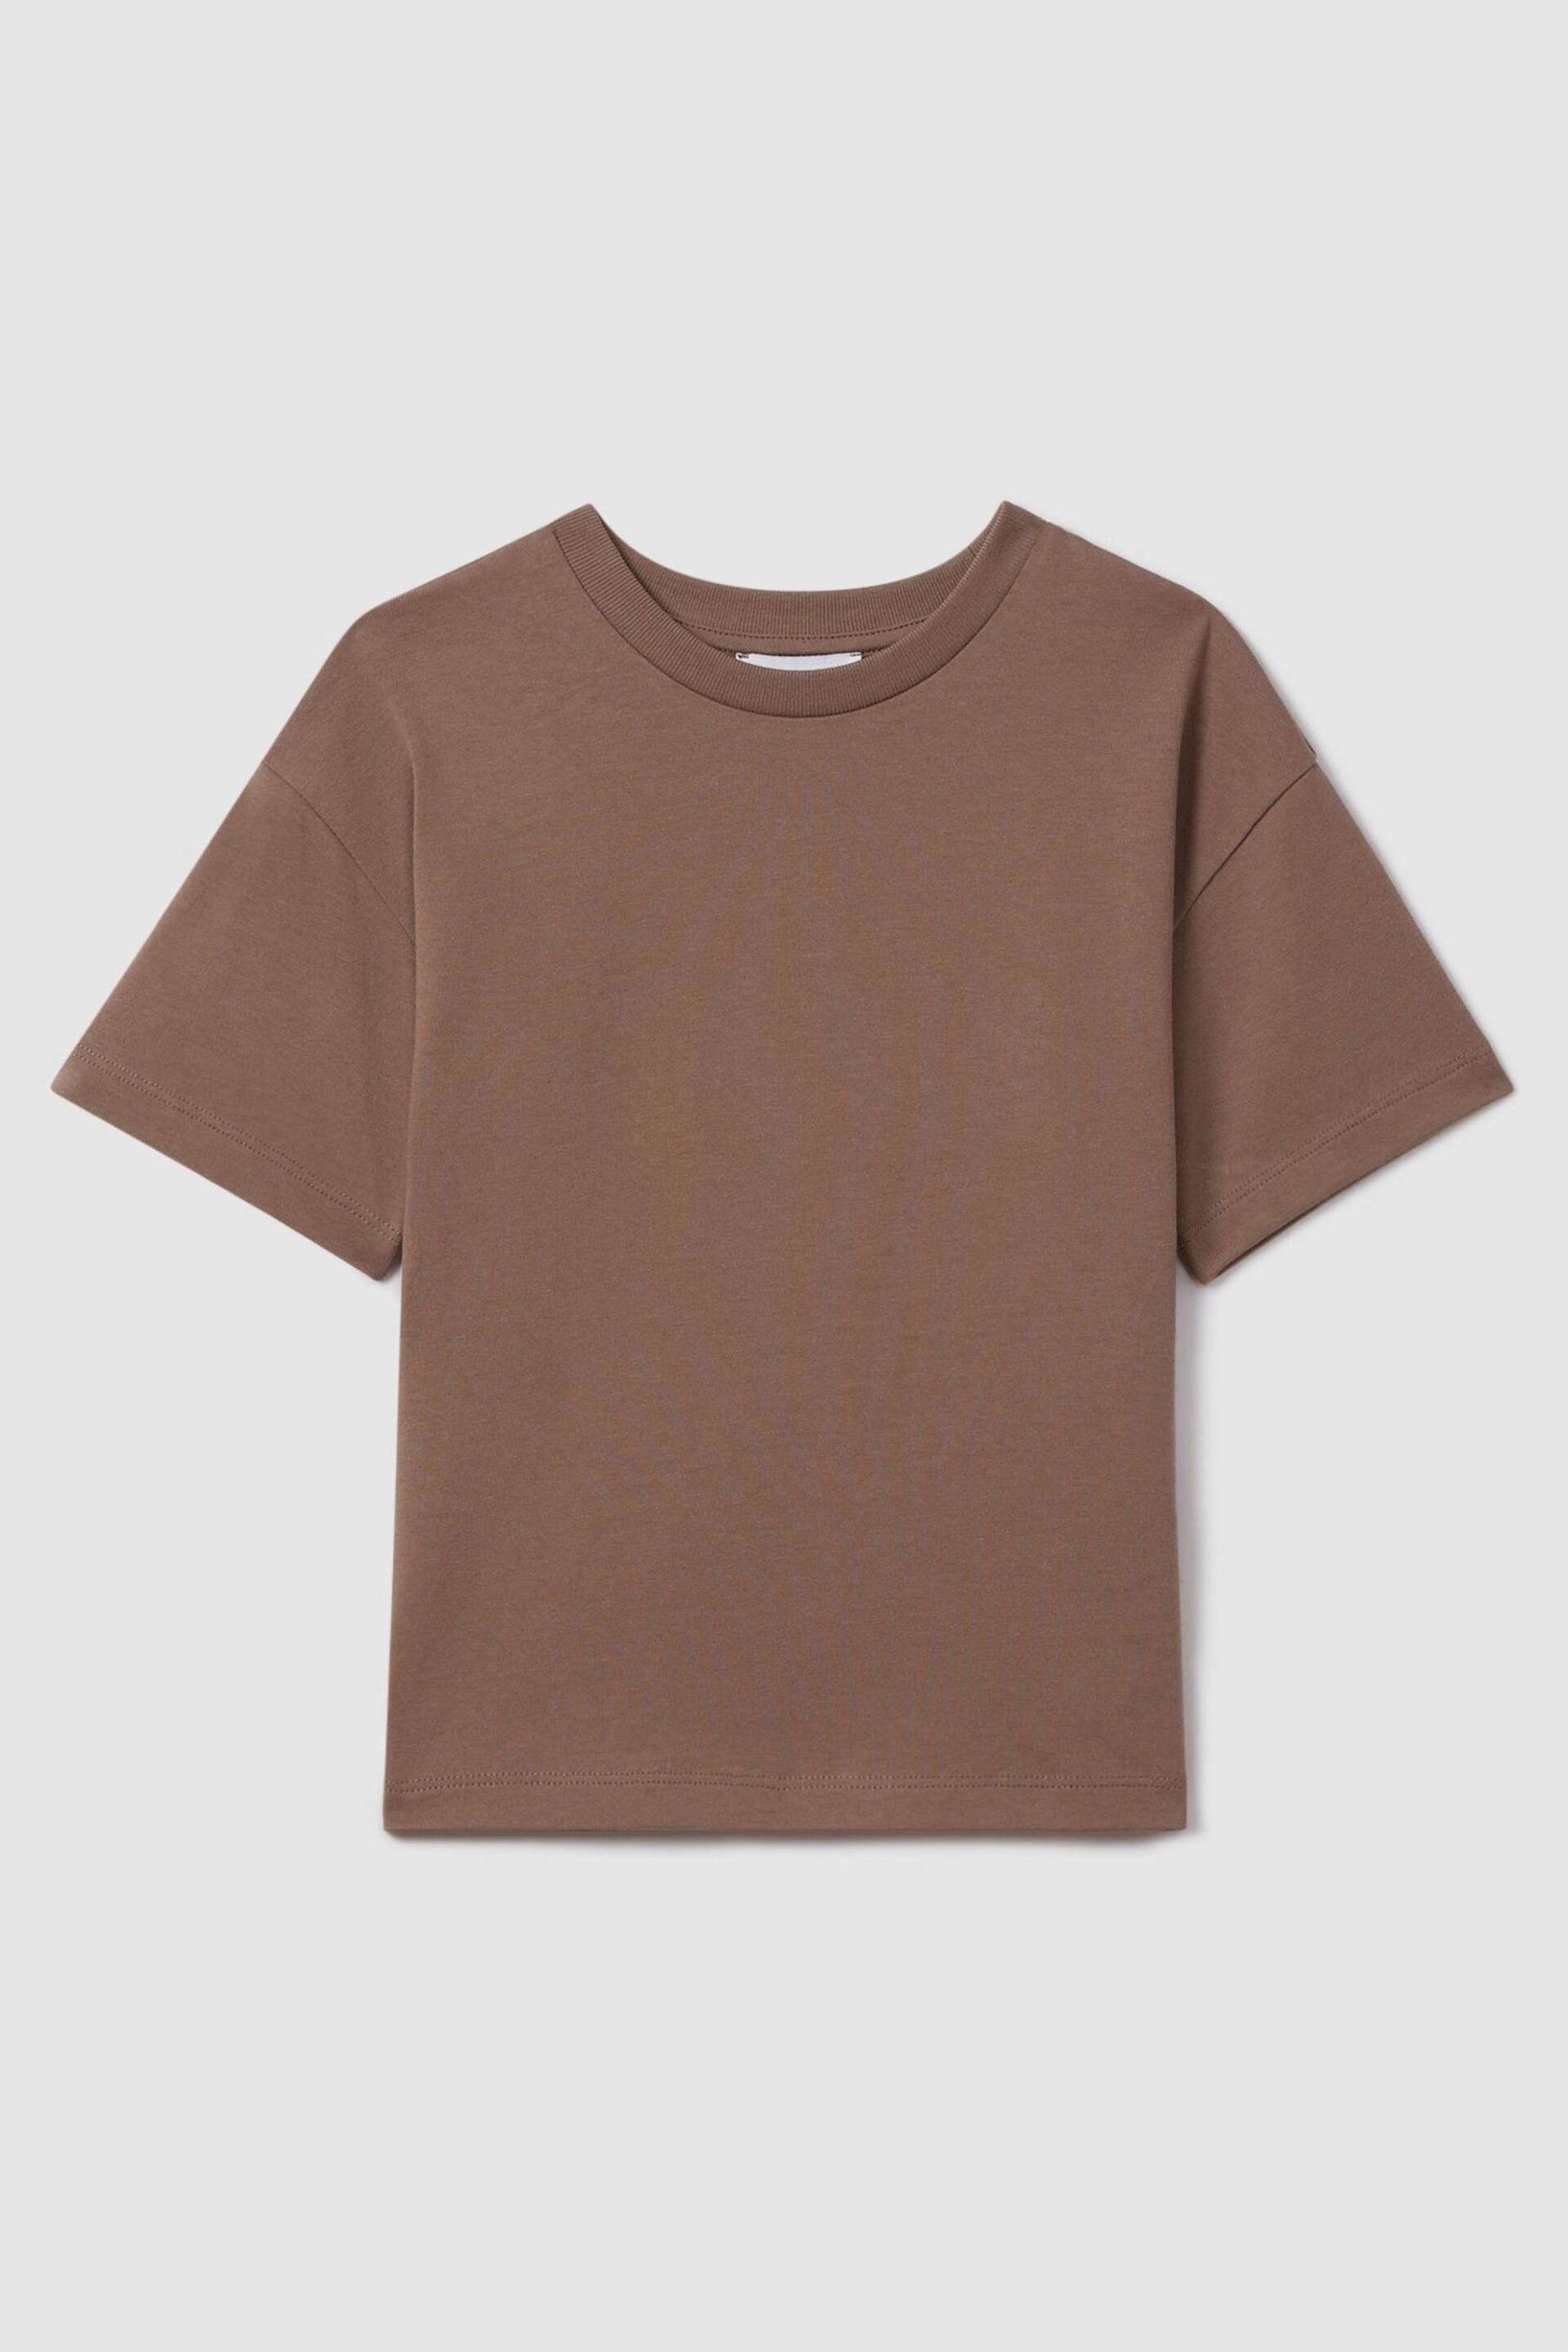 Reiss Mocha Selby Junior Oversized Cotton Crew Neck T-Shirt - Image 1 of 3